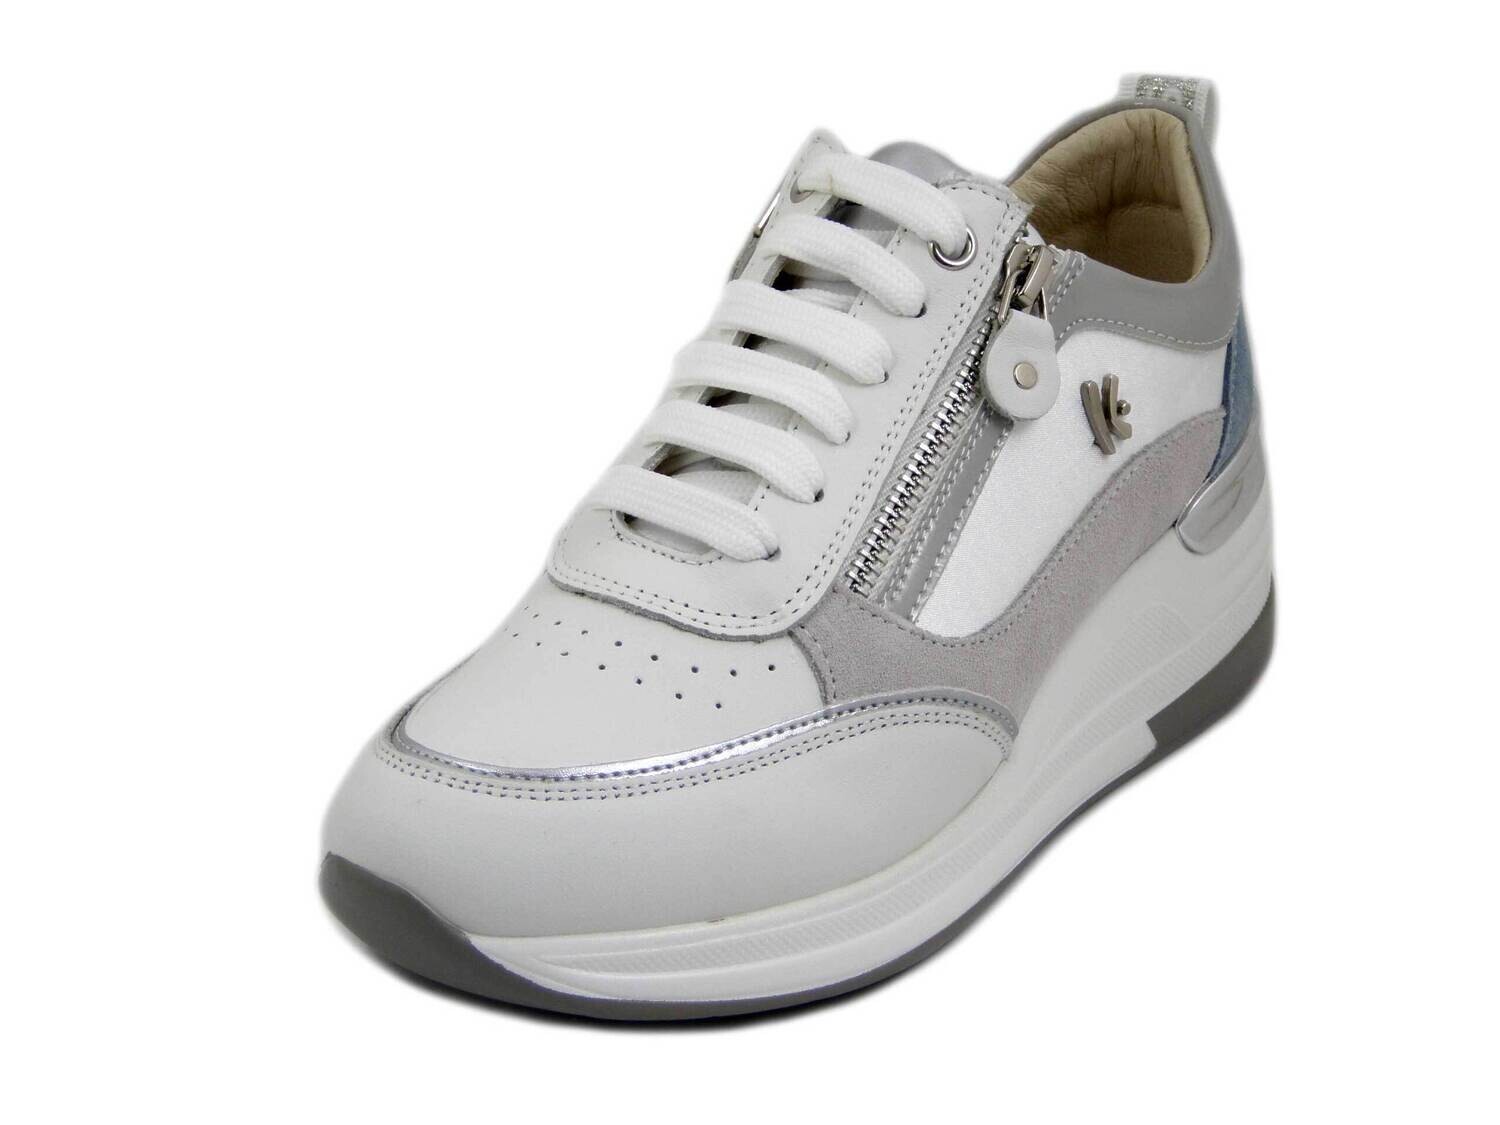 Sneakers Donna Bianche, Zeppa 6 cm, Sottopiede Estraibile, KEYS K7620